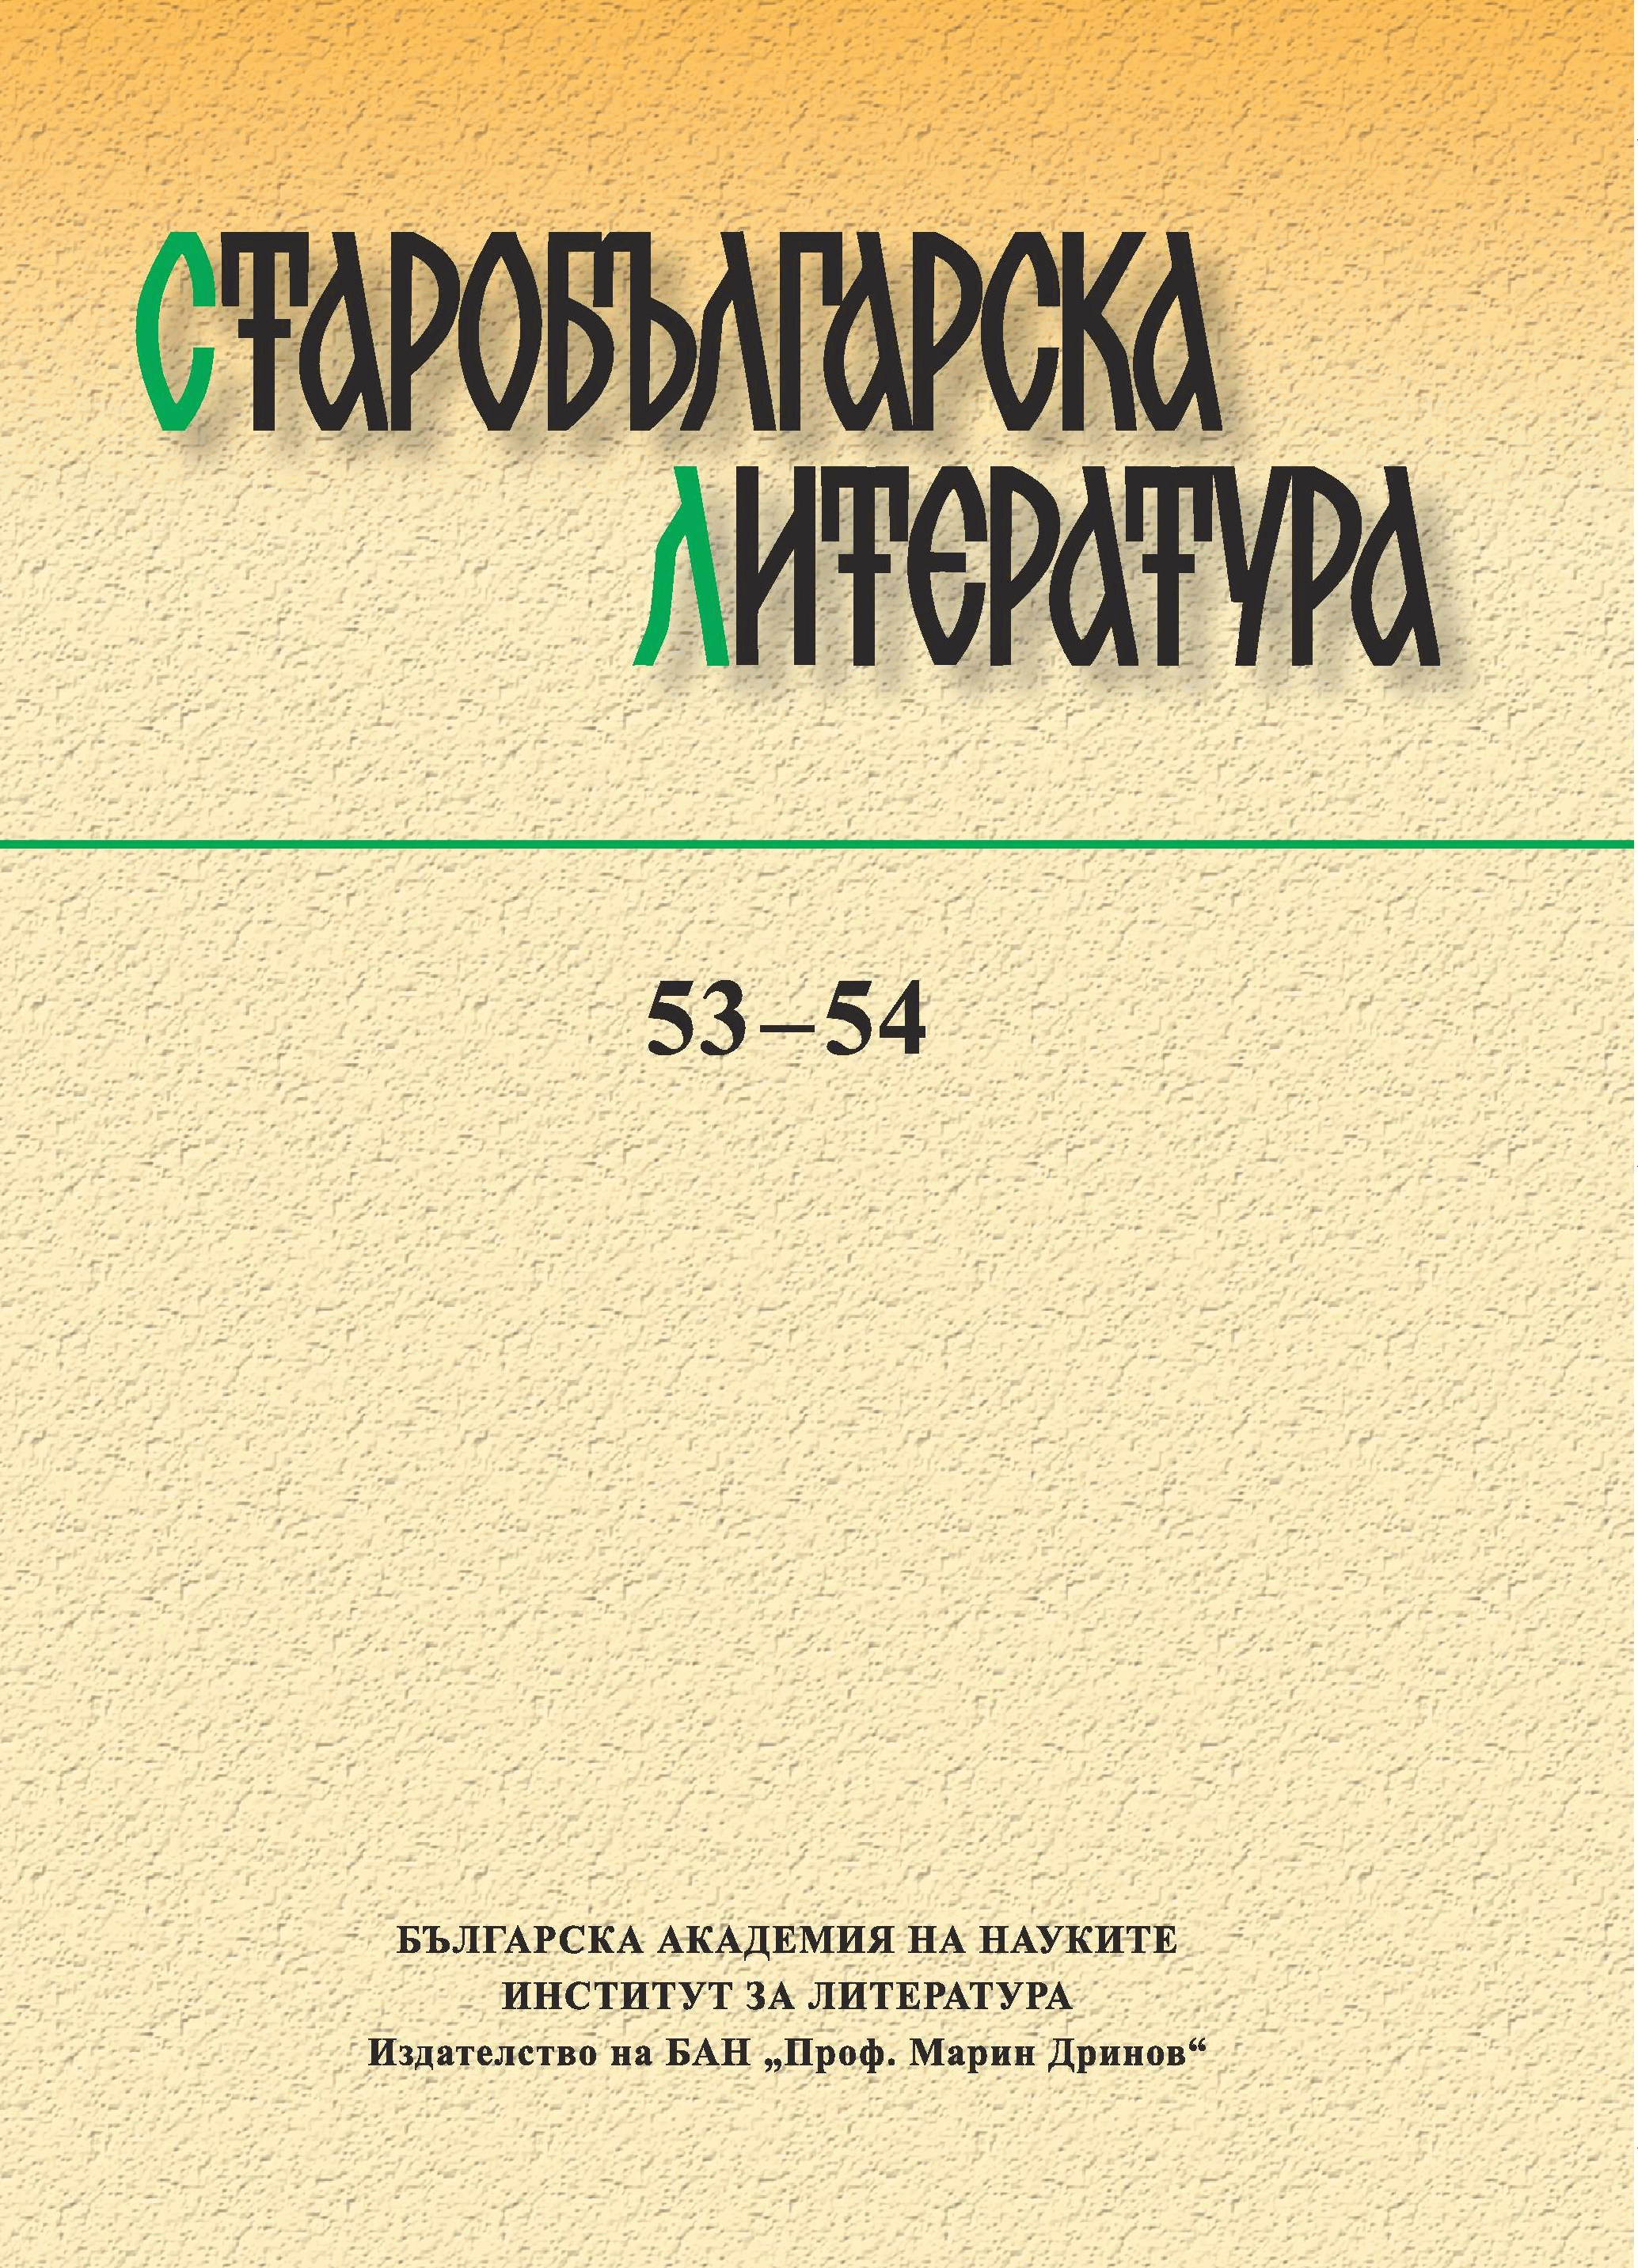 Publications by Professor Anatolii A. Turilov, 1979–2016 Cover Image